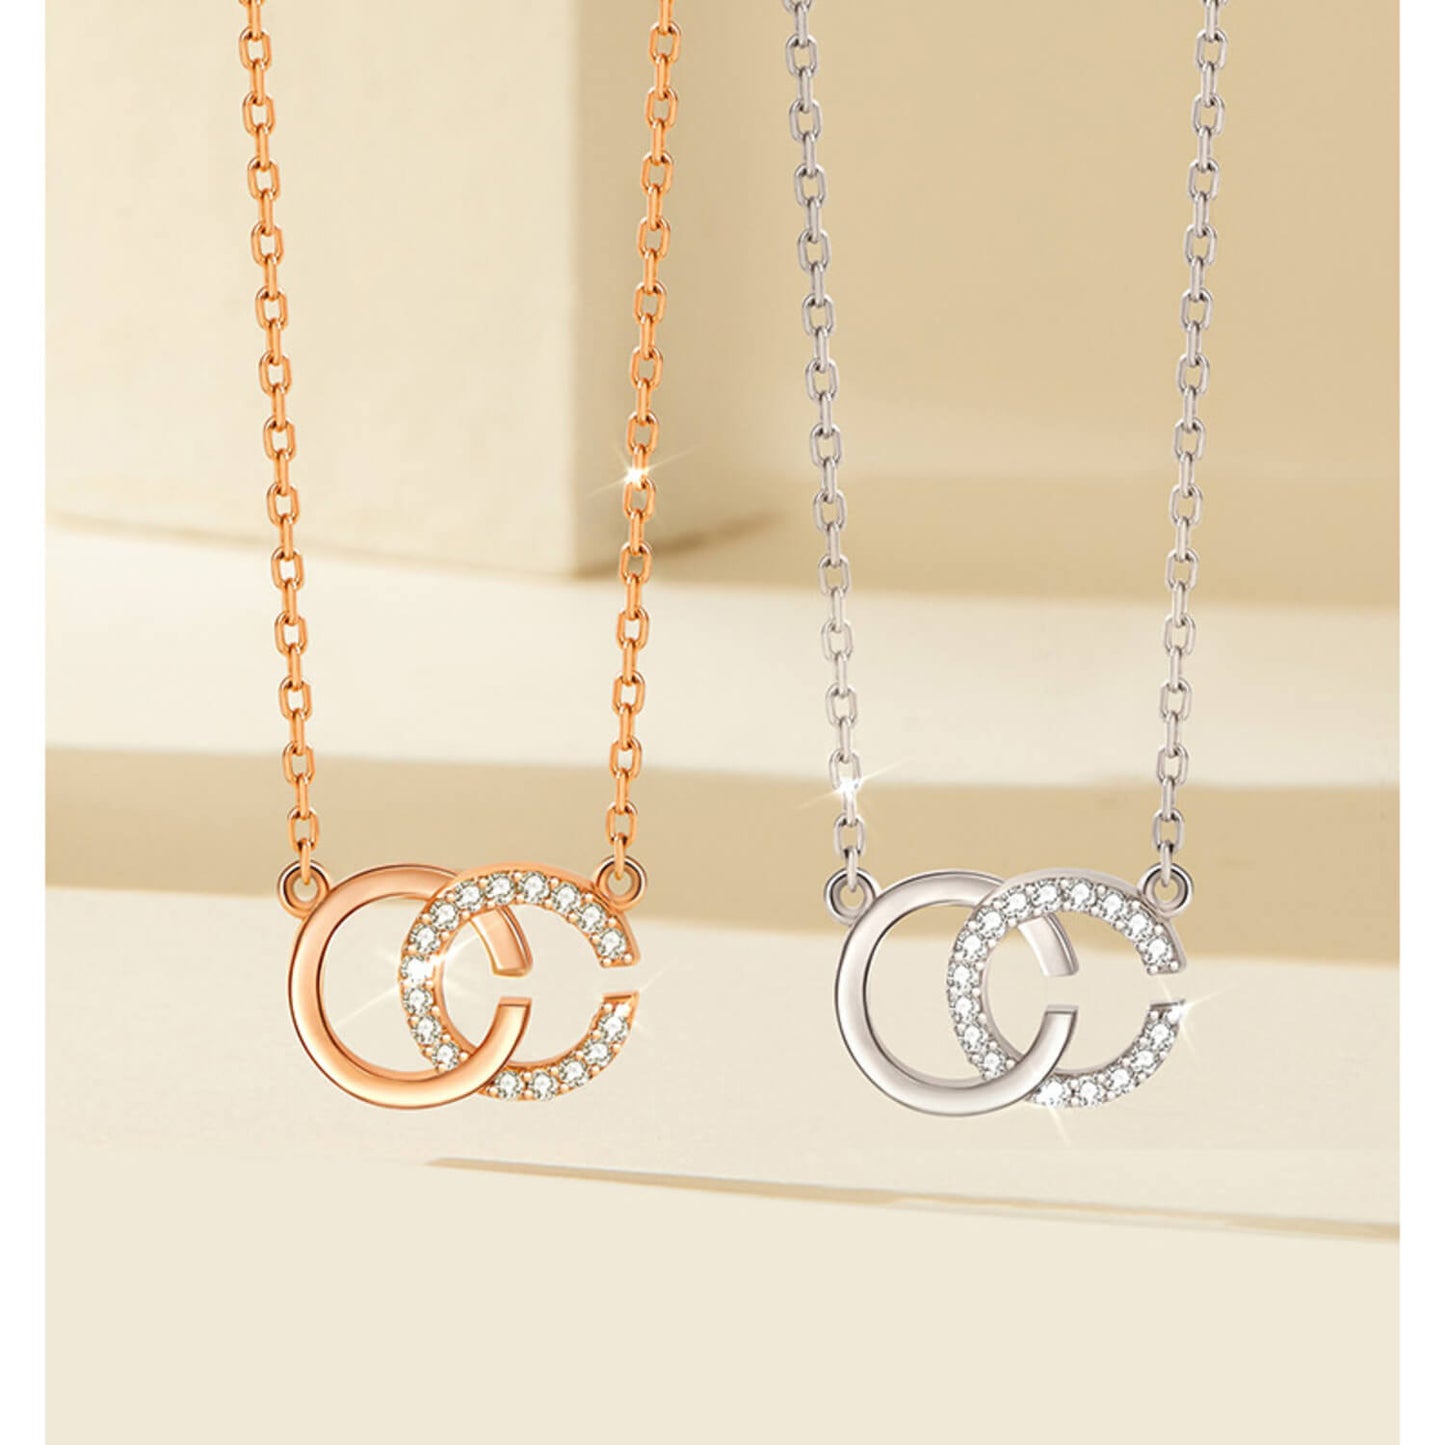 cc necklace chanel